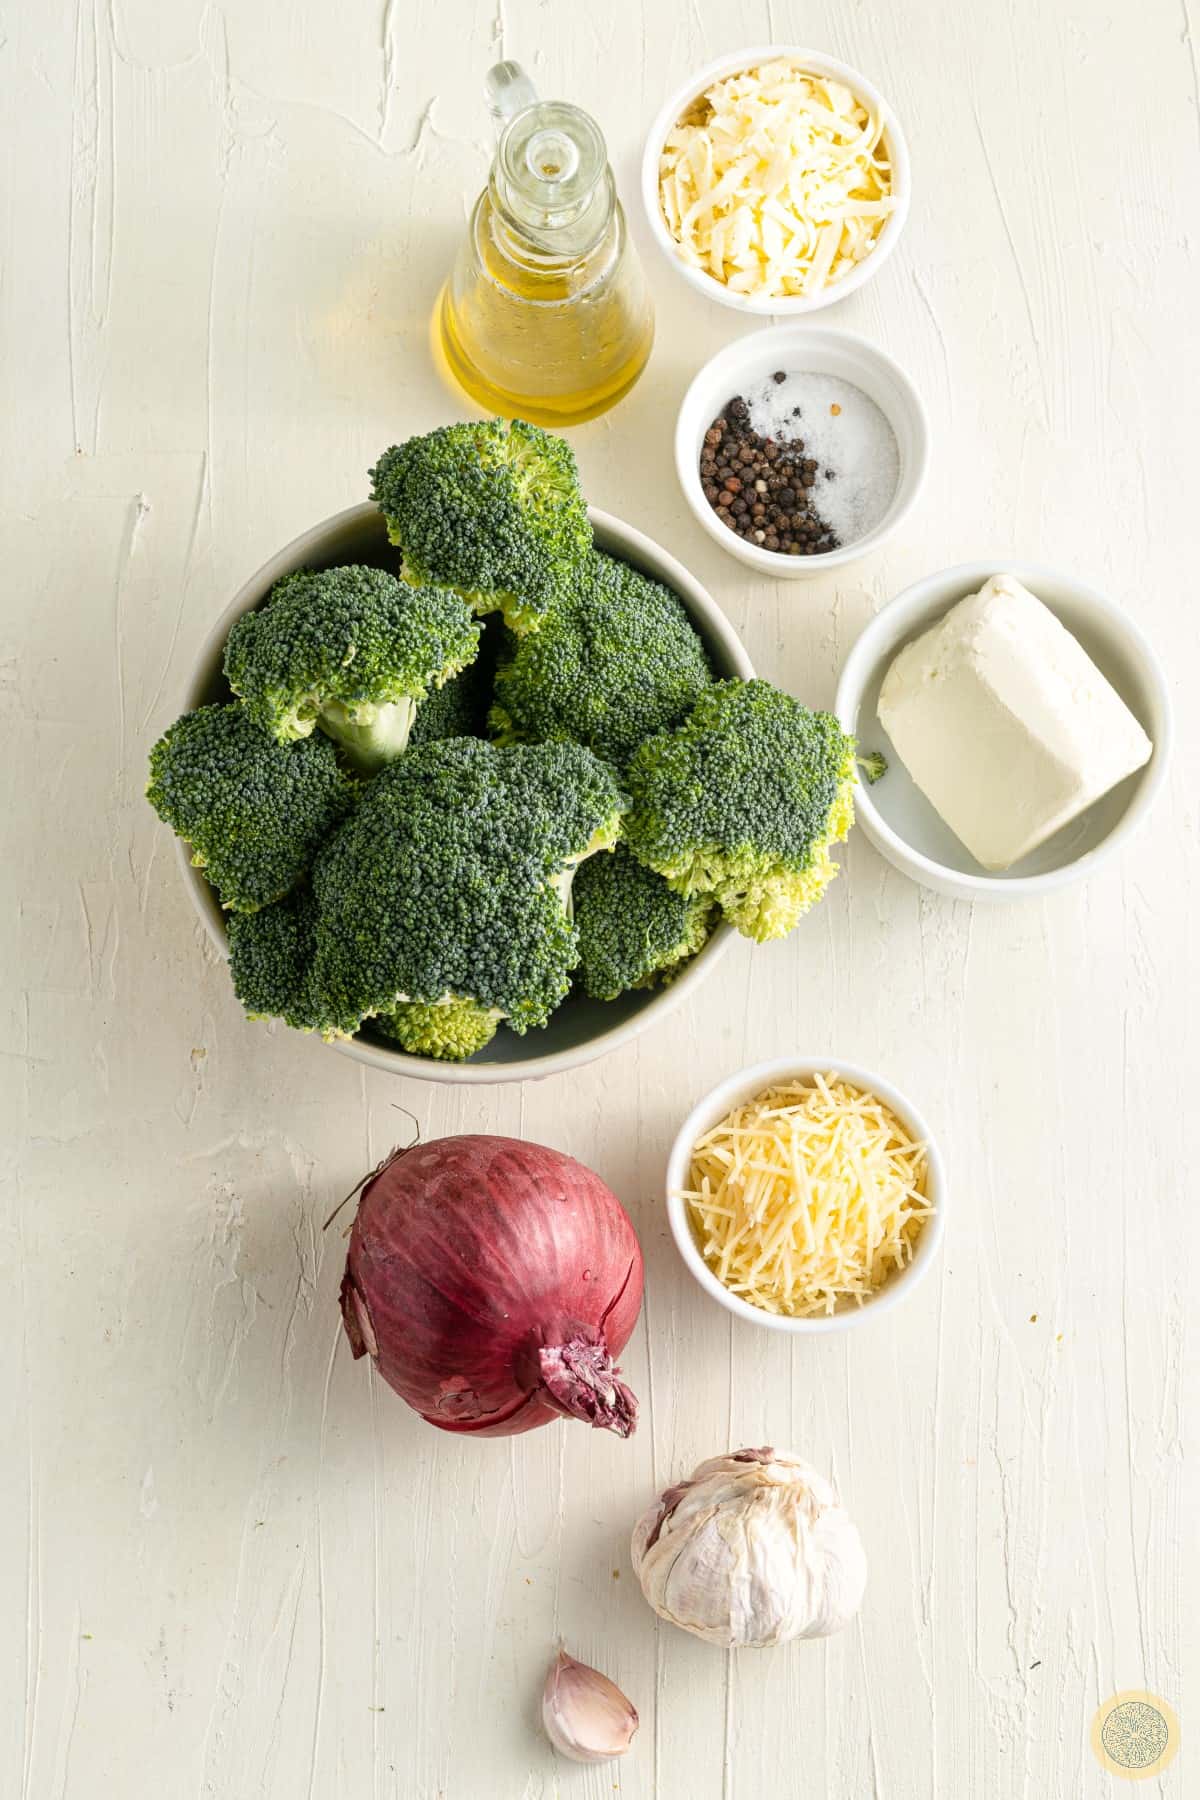 What Is Baked Broccoli Dip? - ingredients